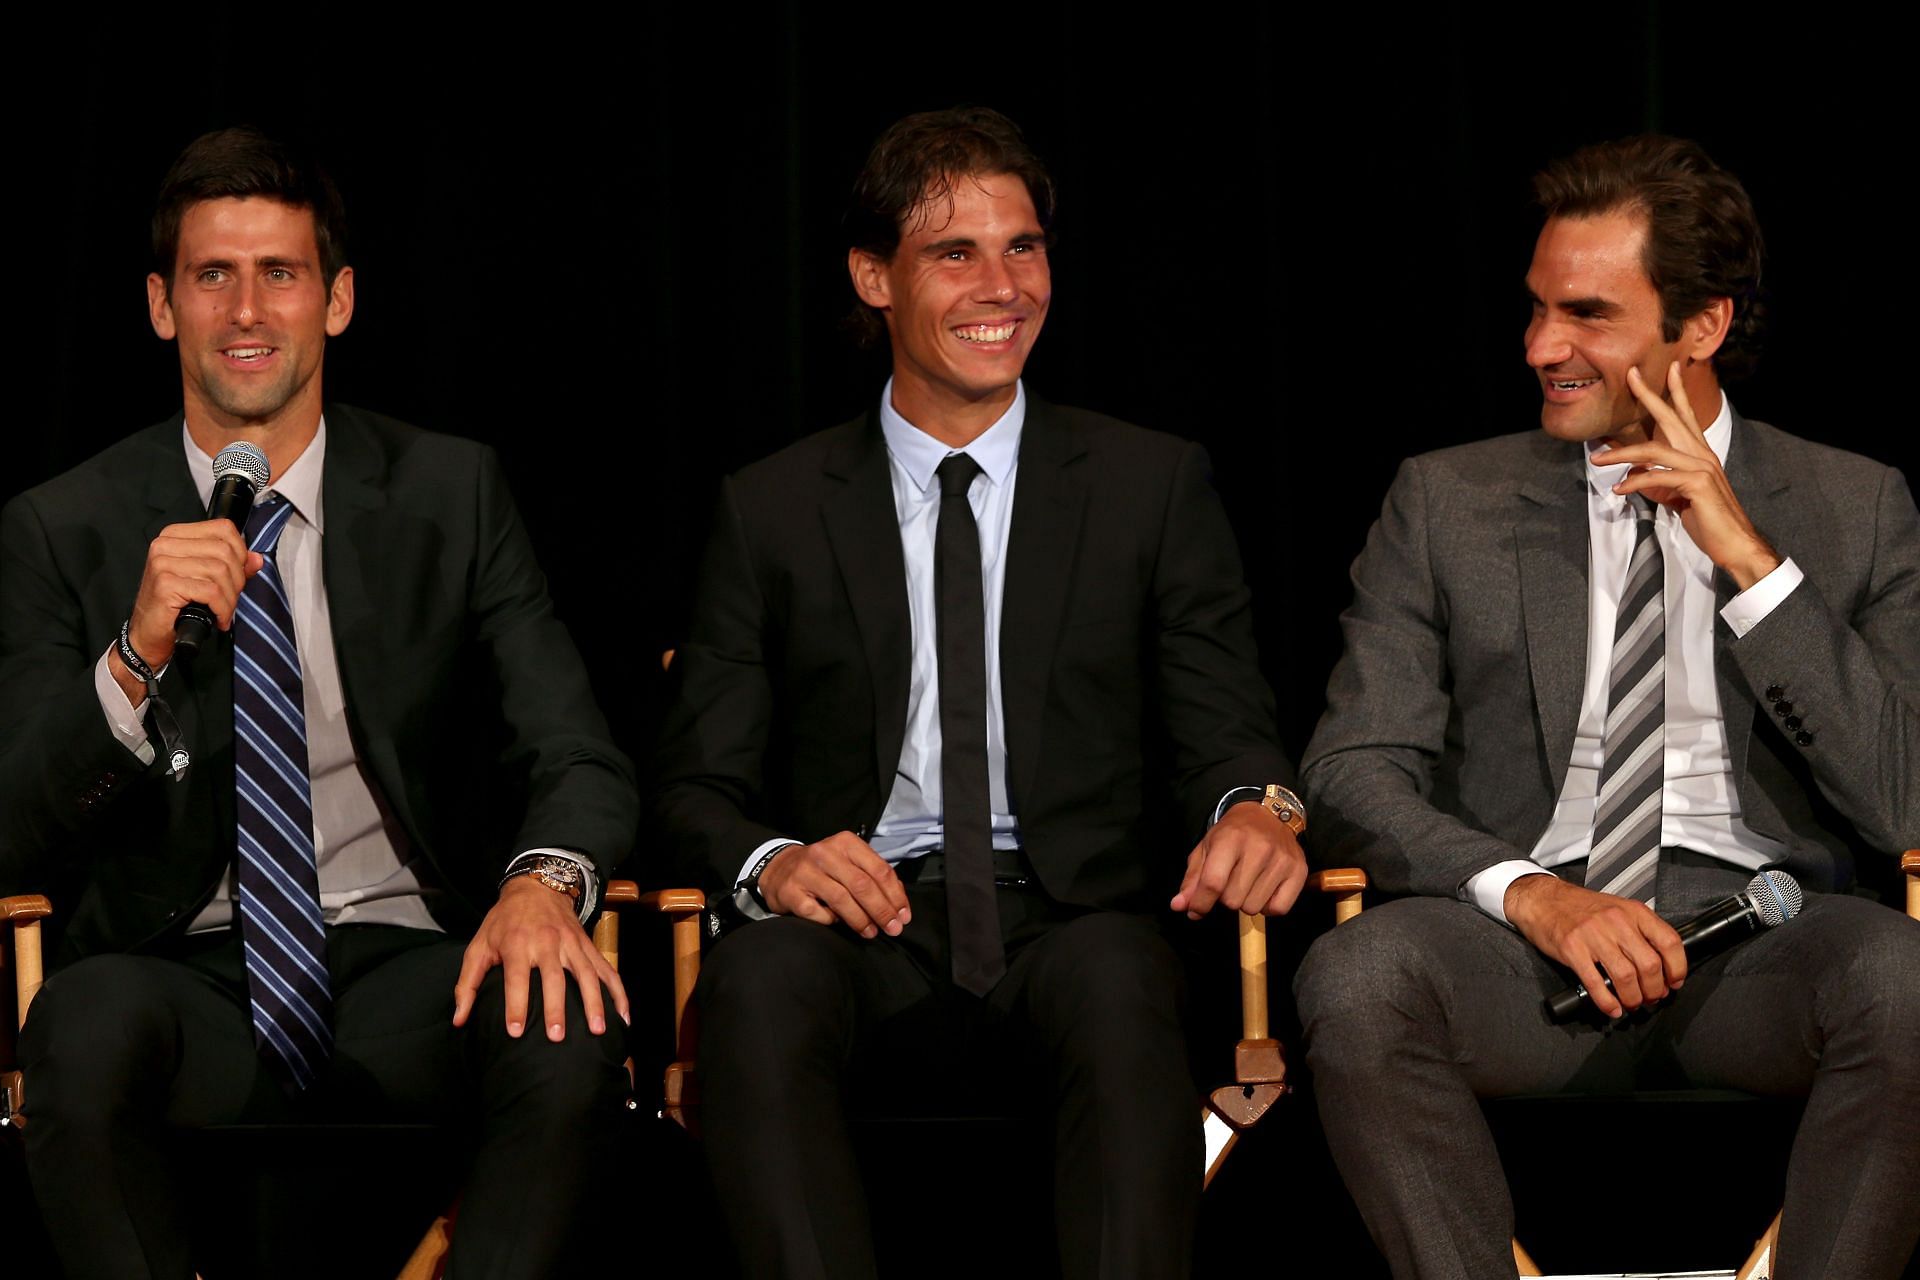 Roger Federer, Rafael Nadal, and Novak Djokovic during an event